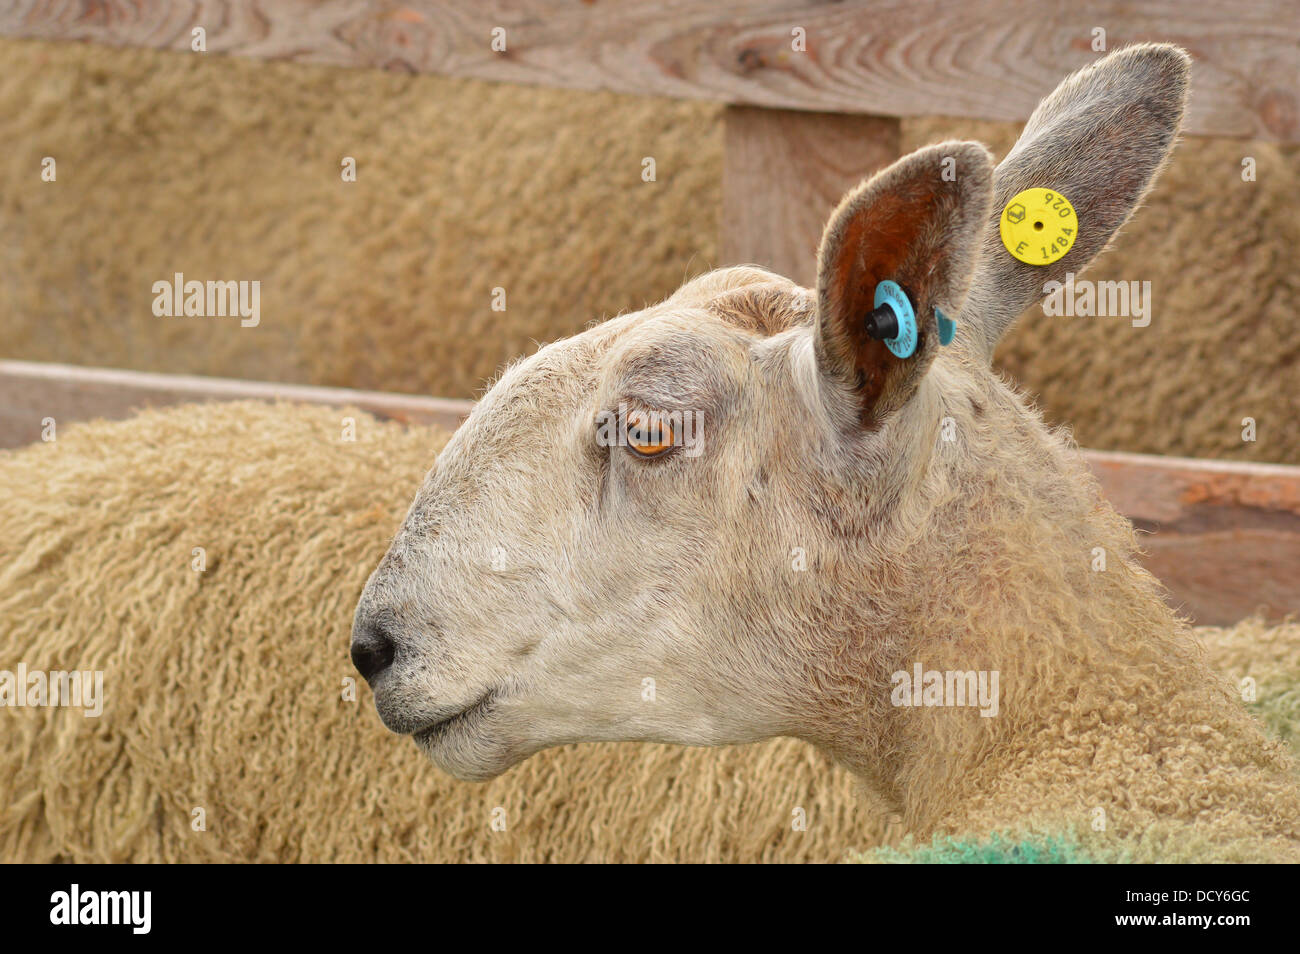 sheep head profile - woolly fleece , no horns Stock Photo